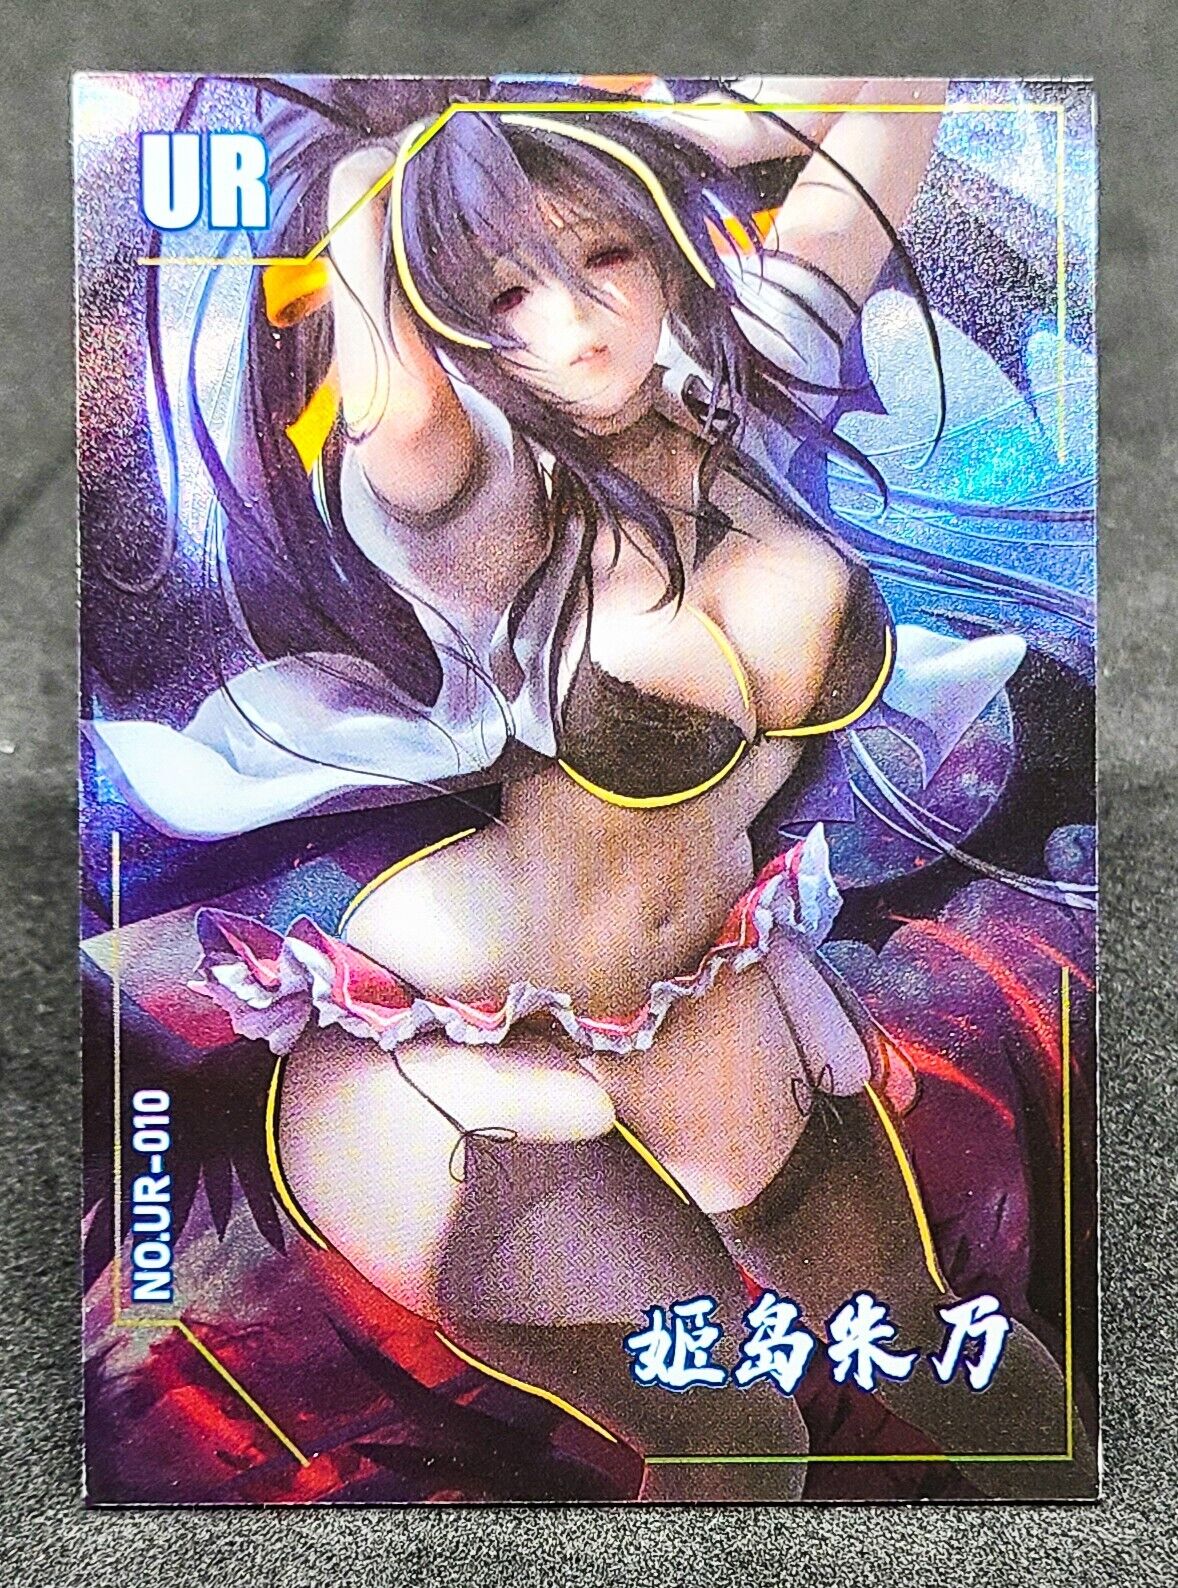 AKENO HIMEJIMA UR-010 Super Sister Goddess Story Waifu Anime Goddess Story Base - Hobby Gems